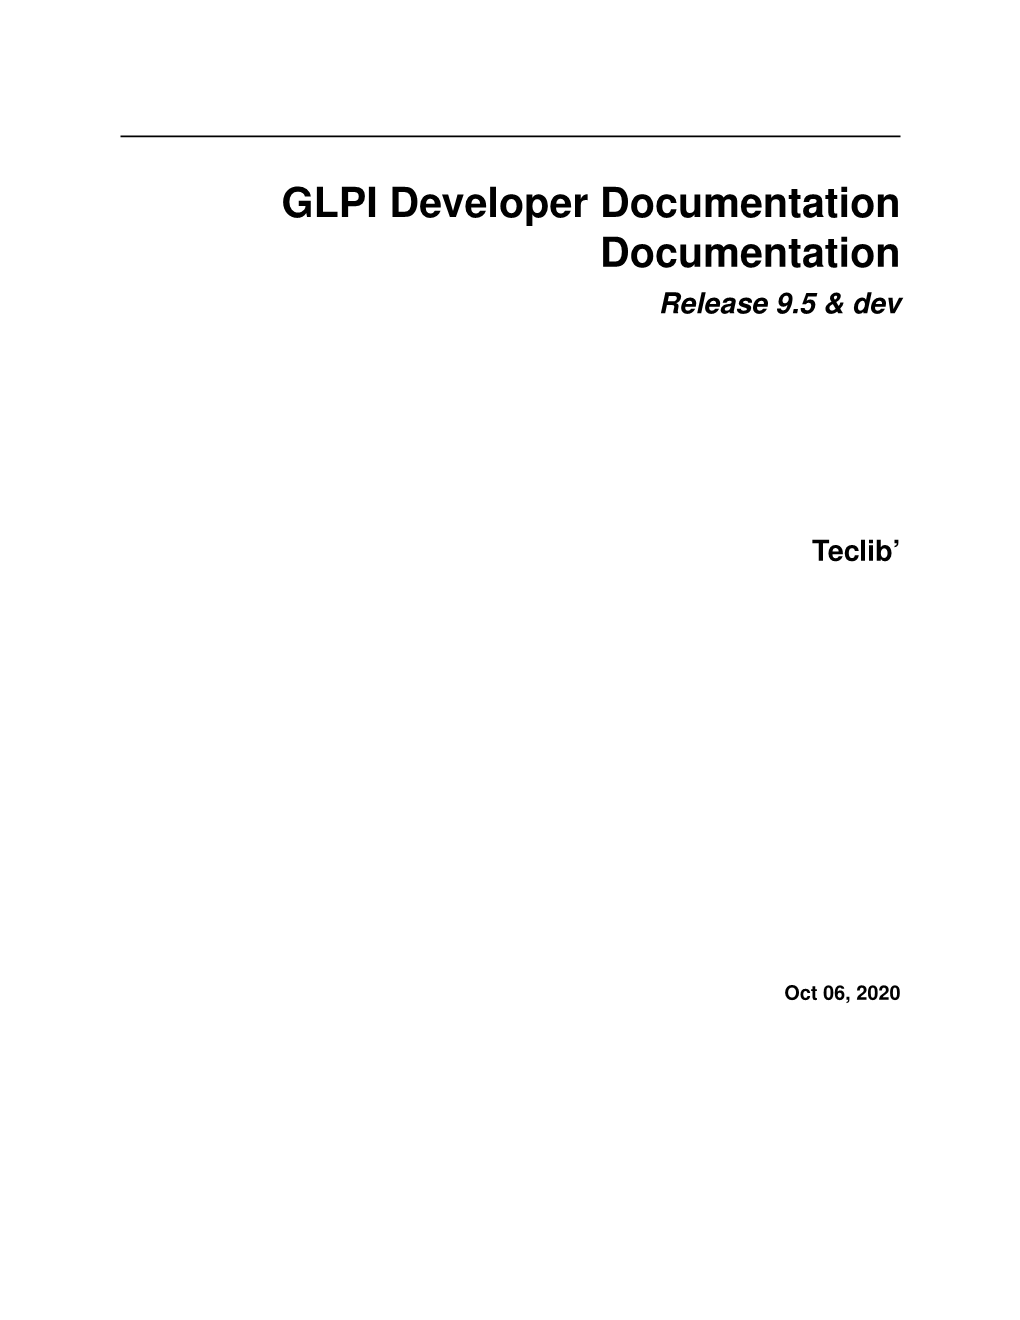 GLPI Developer Documentation Documentation Release 9.5 & Dev